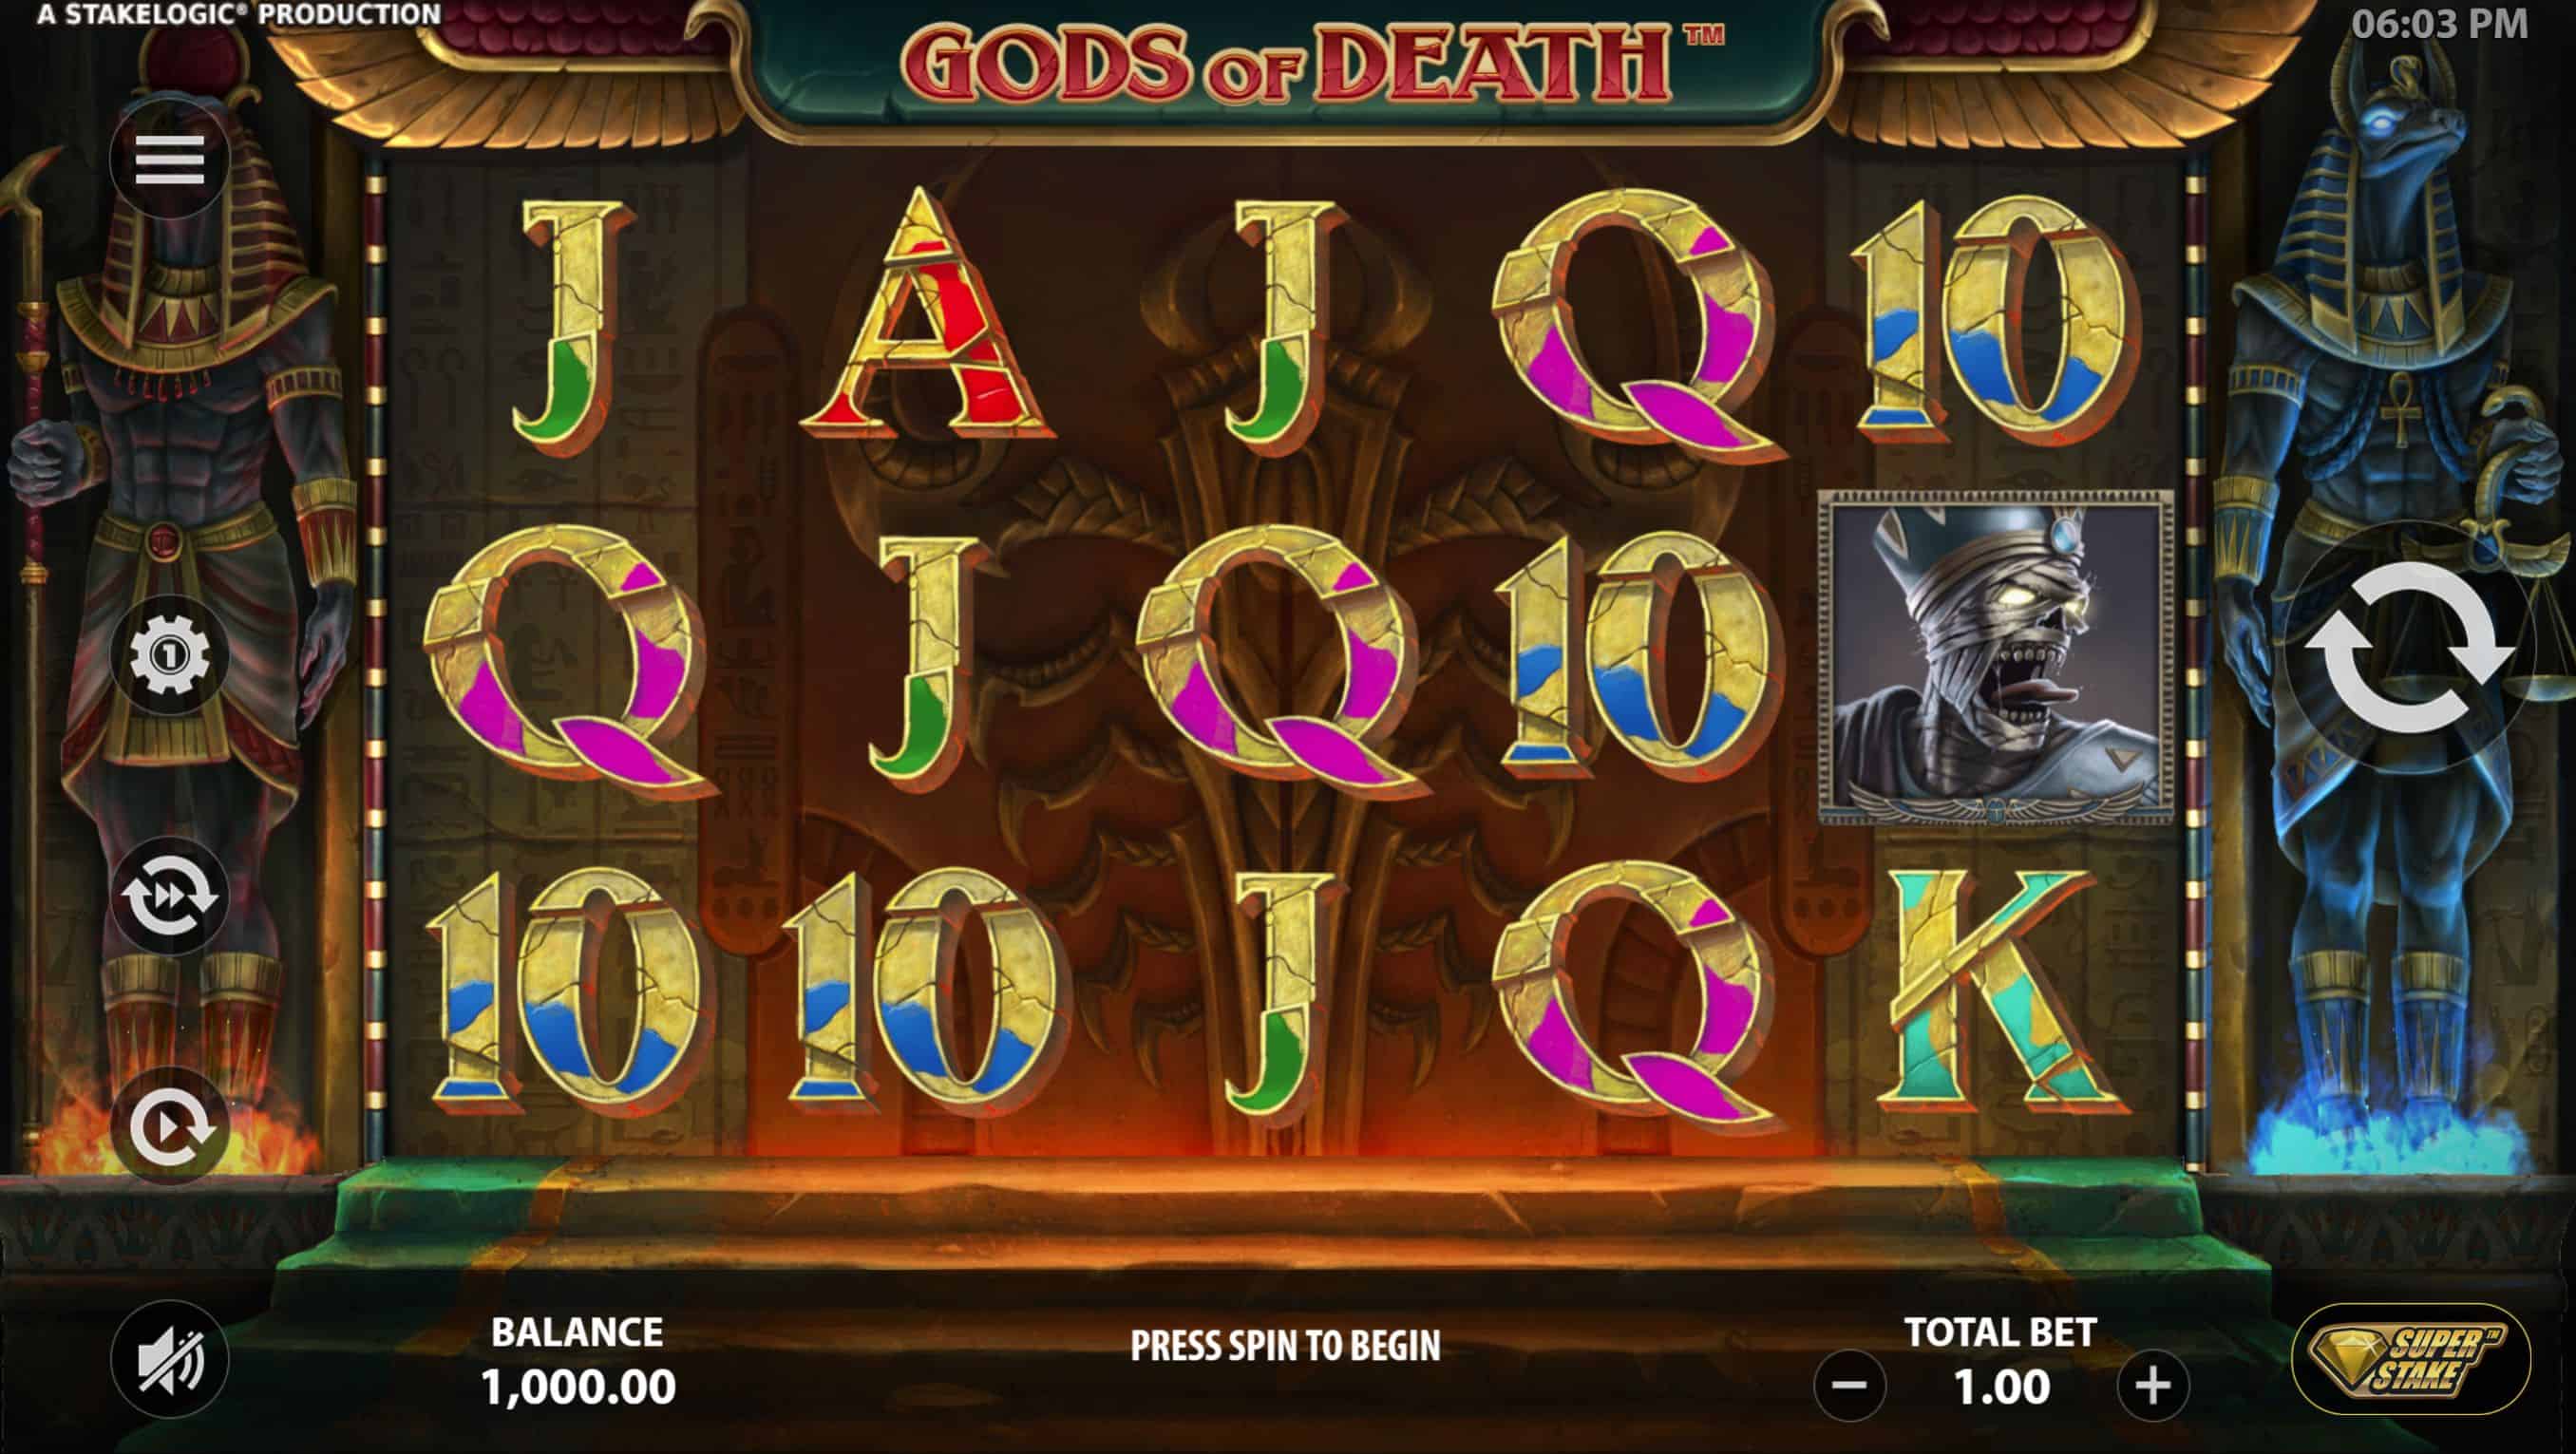 Gods of Death Slot Game Free Play at Casino Ireland 01